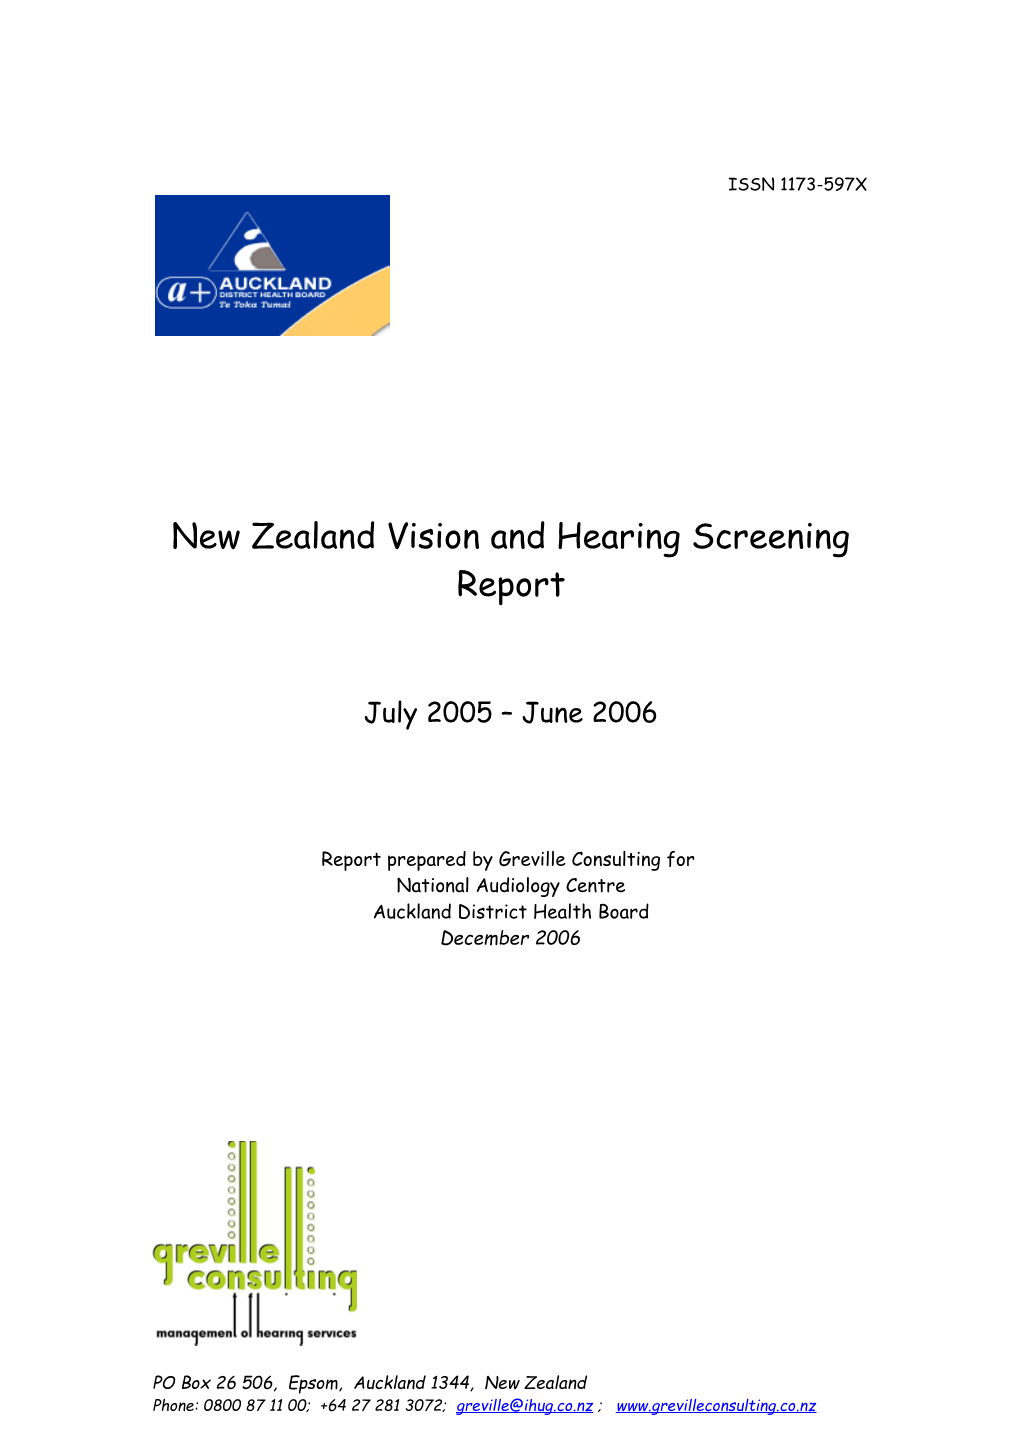 New Zealand Vision & Hearing Screening Report 2005/06